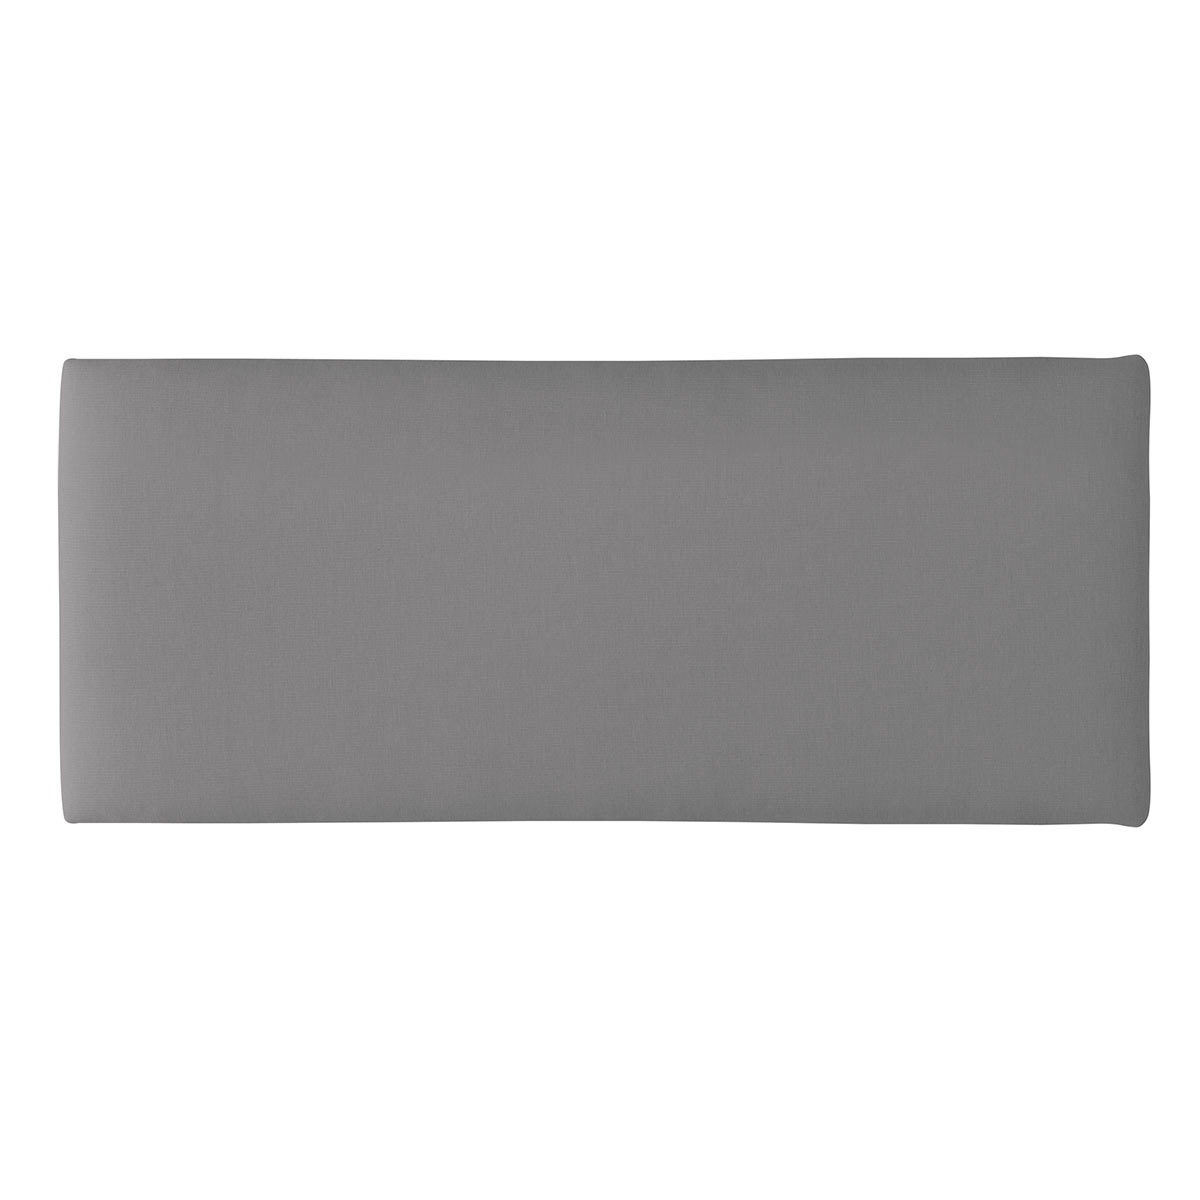 Silentnight Bexley Grey Fabric Headboard in 5 Sizes